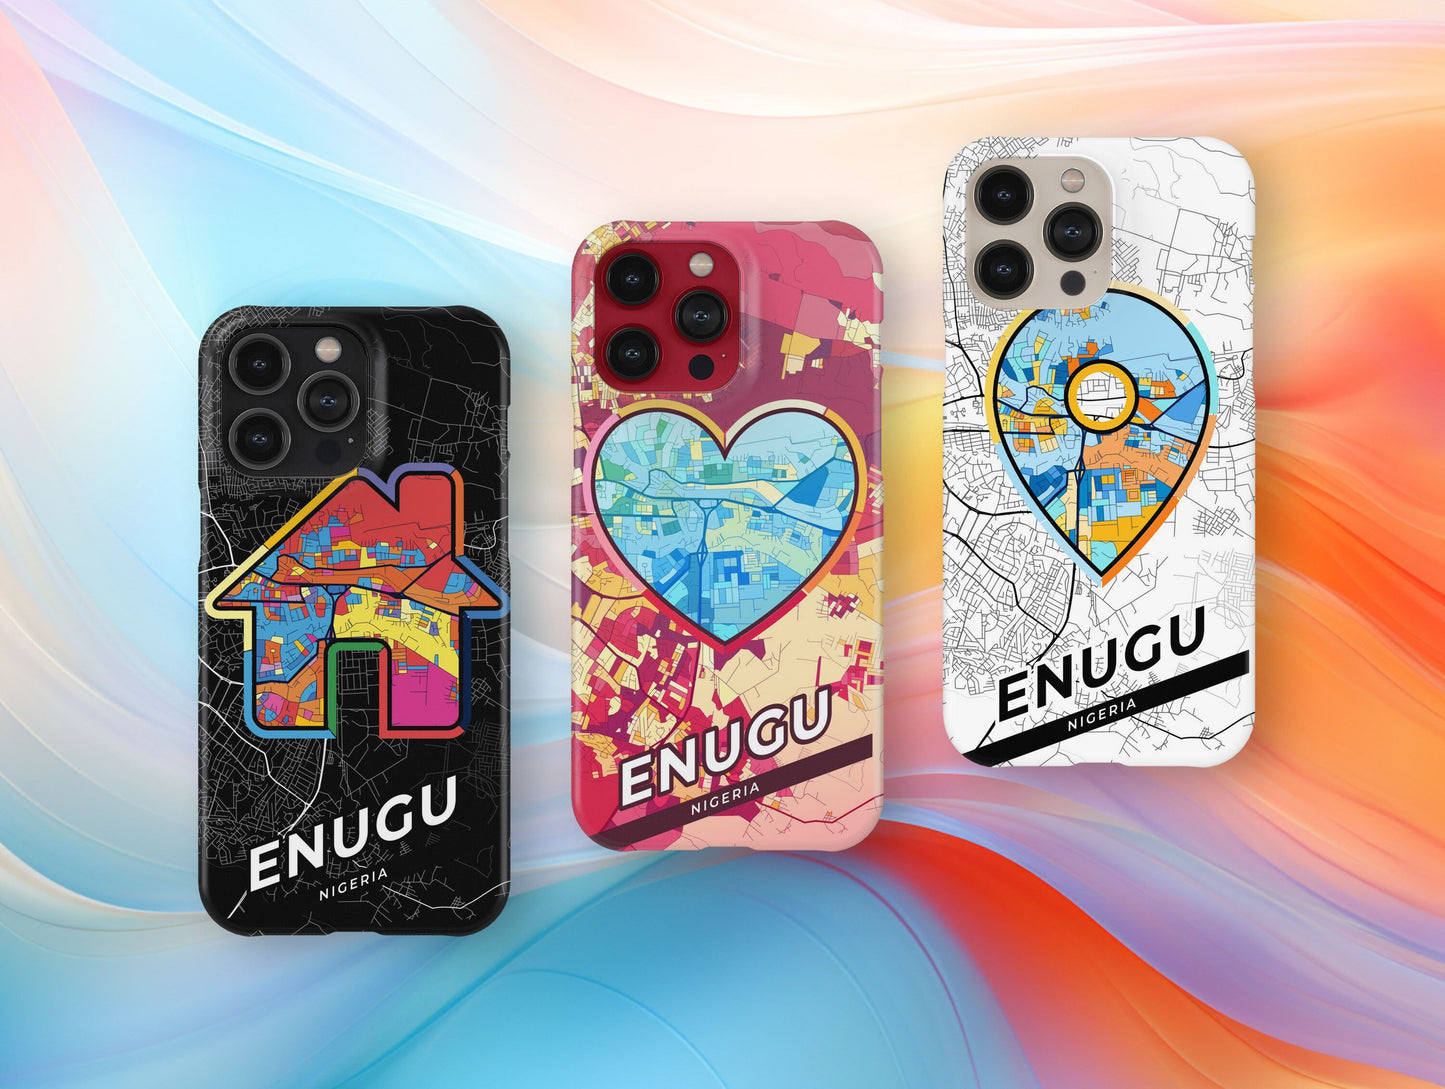 Enugu Nigeria slim phone case with colorful icon. Birthday, wedding or housewarming gift. Couple match cases.